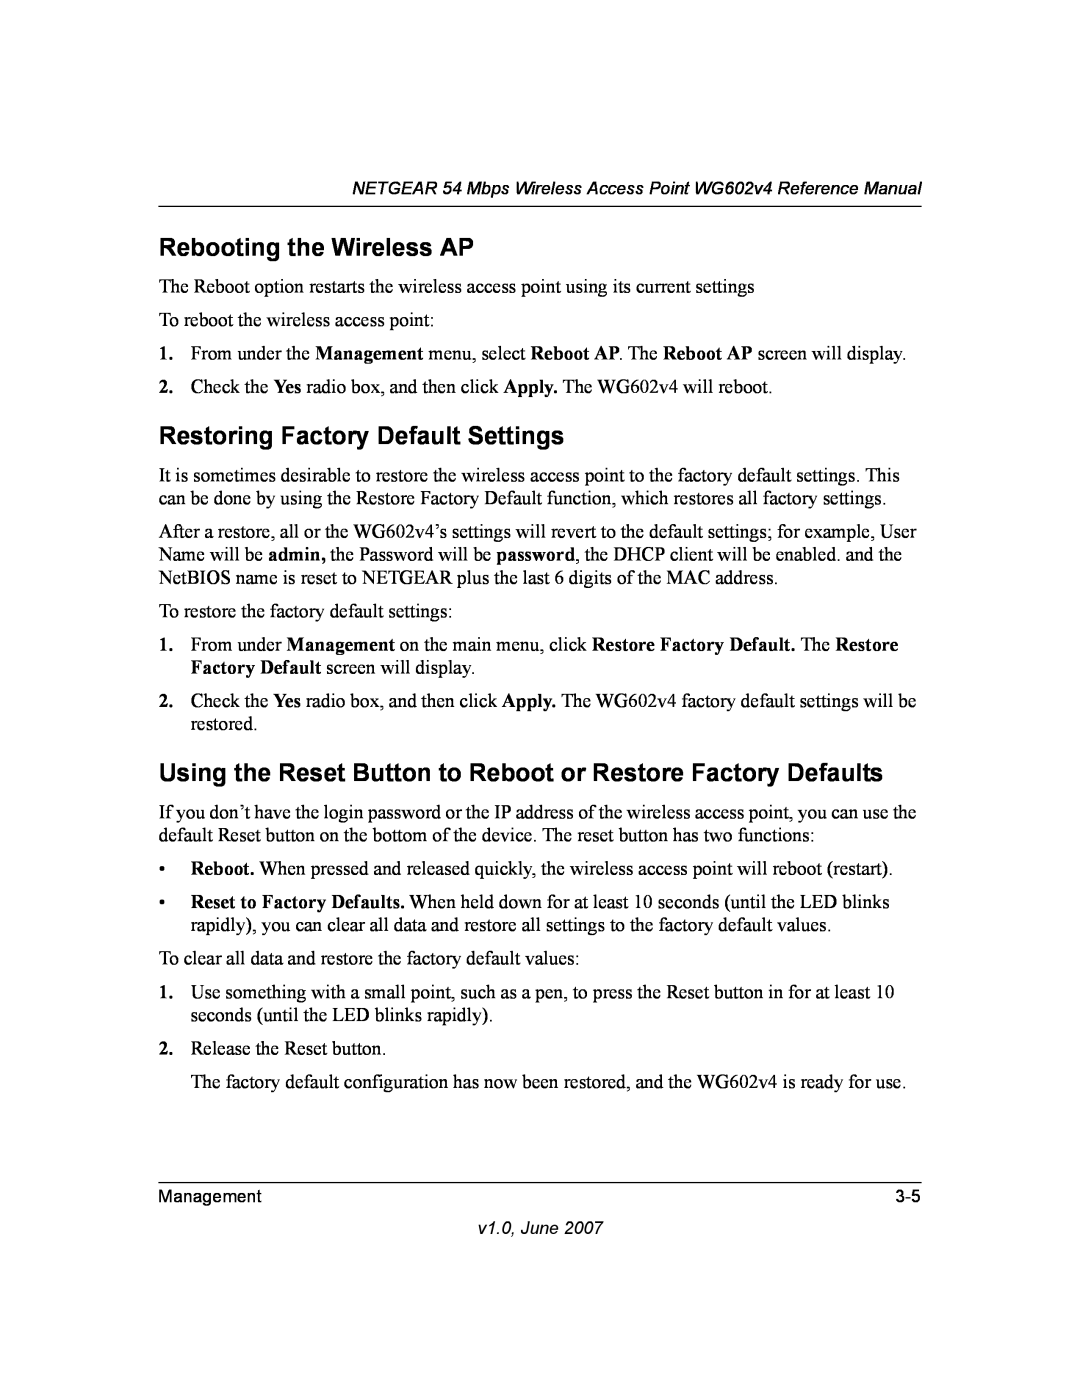 NETGEAR WG602V4 manual Rebooting the Wireless AP, Restoring Factory Default Settings 